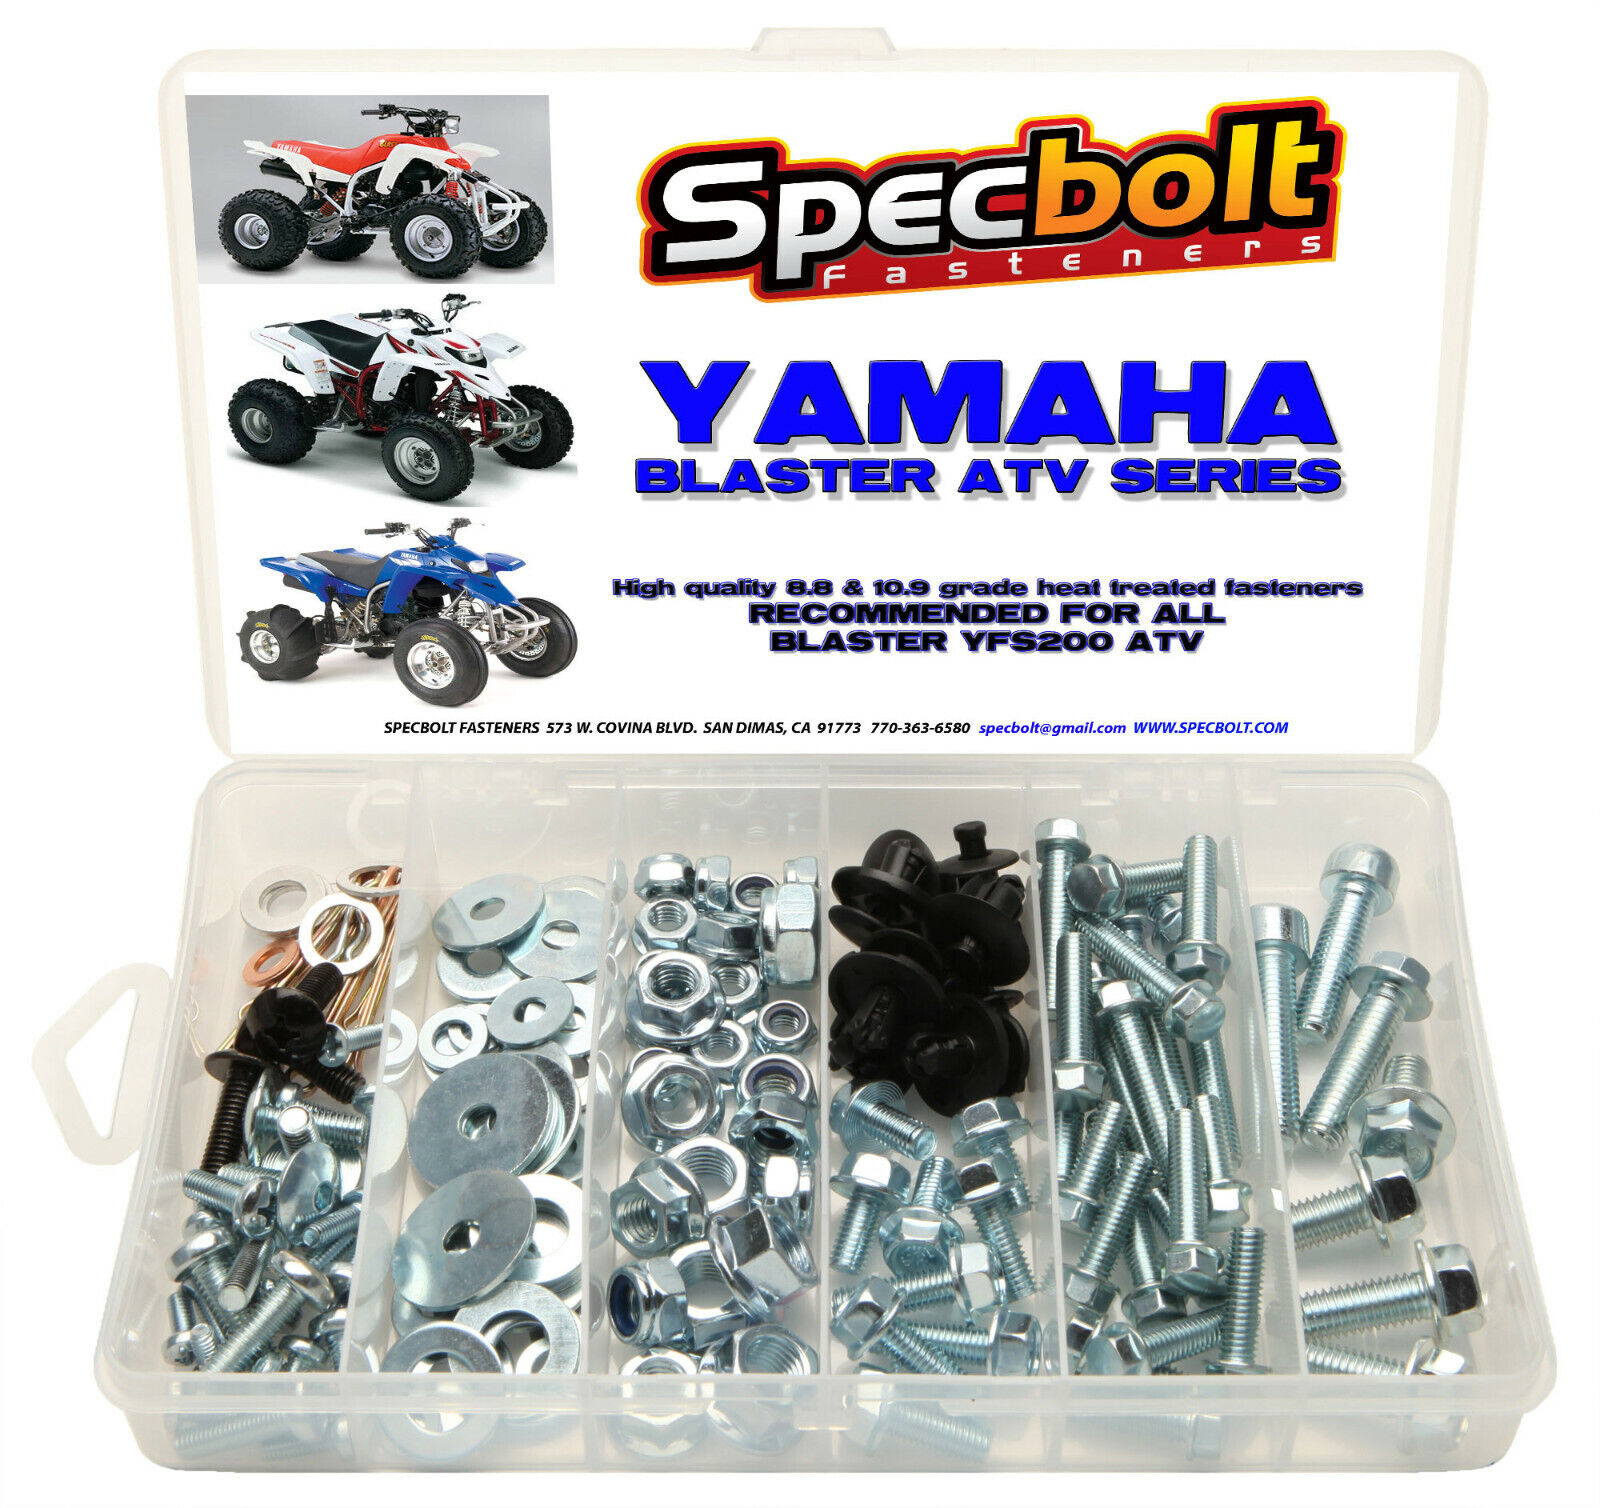 SPECBOLT Sale special price 120PC YAMAHA BLASTER BOLT ATV KIT QUAD Ranking integrated 1st place YFS200